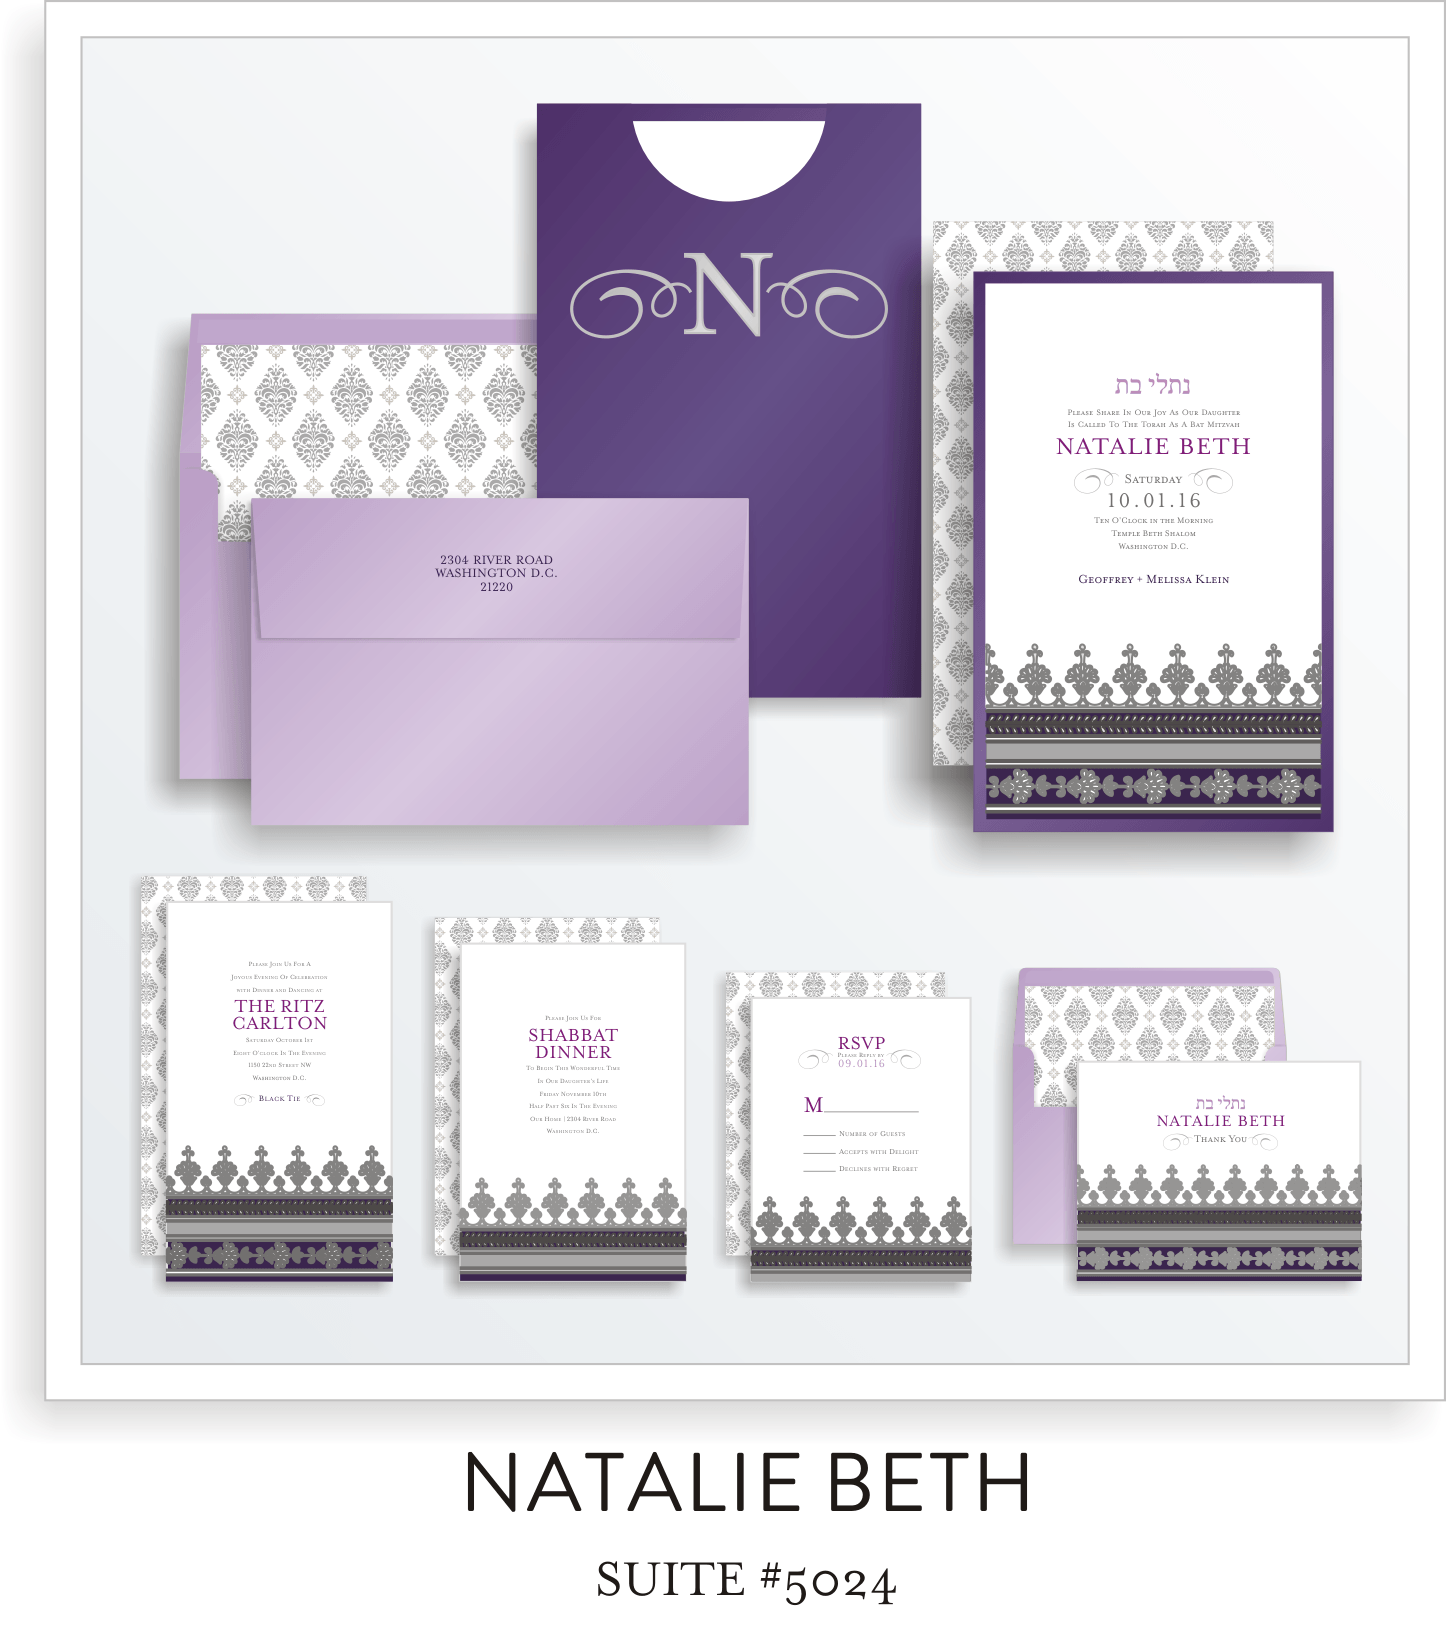 Copy of Copy of Bat Mitzvah Invitation Suite 5024 - Natalie Beth